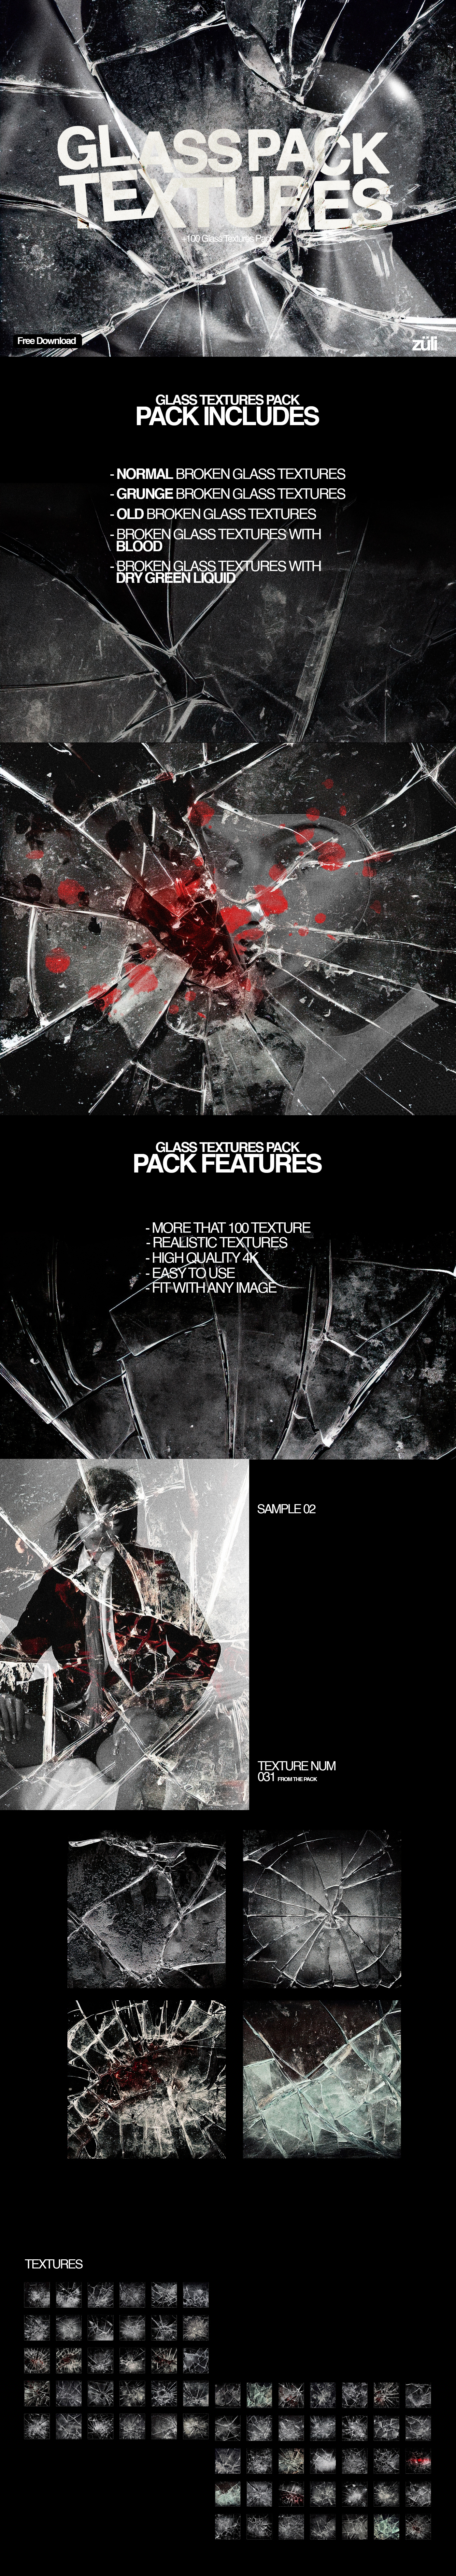 textures Pack free Overlay grunge Retro broken glass glass download glass texture